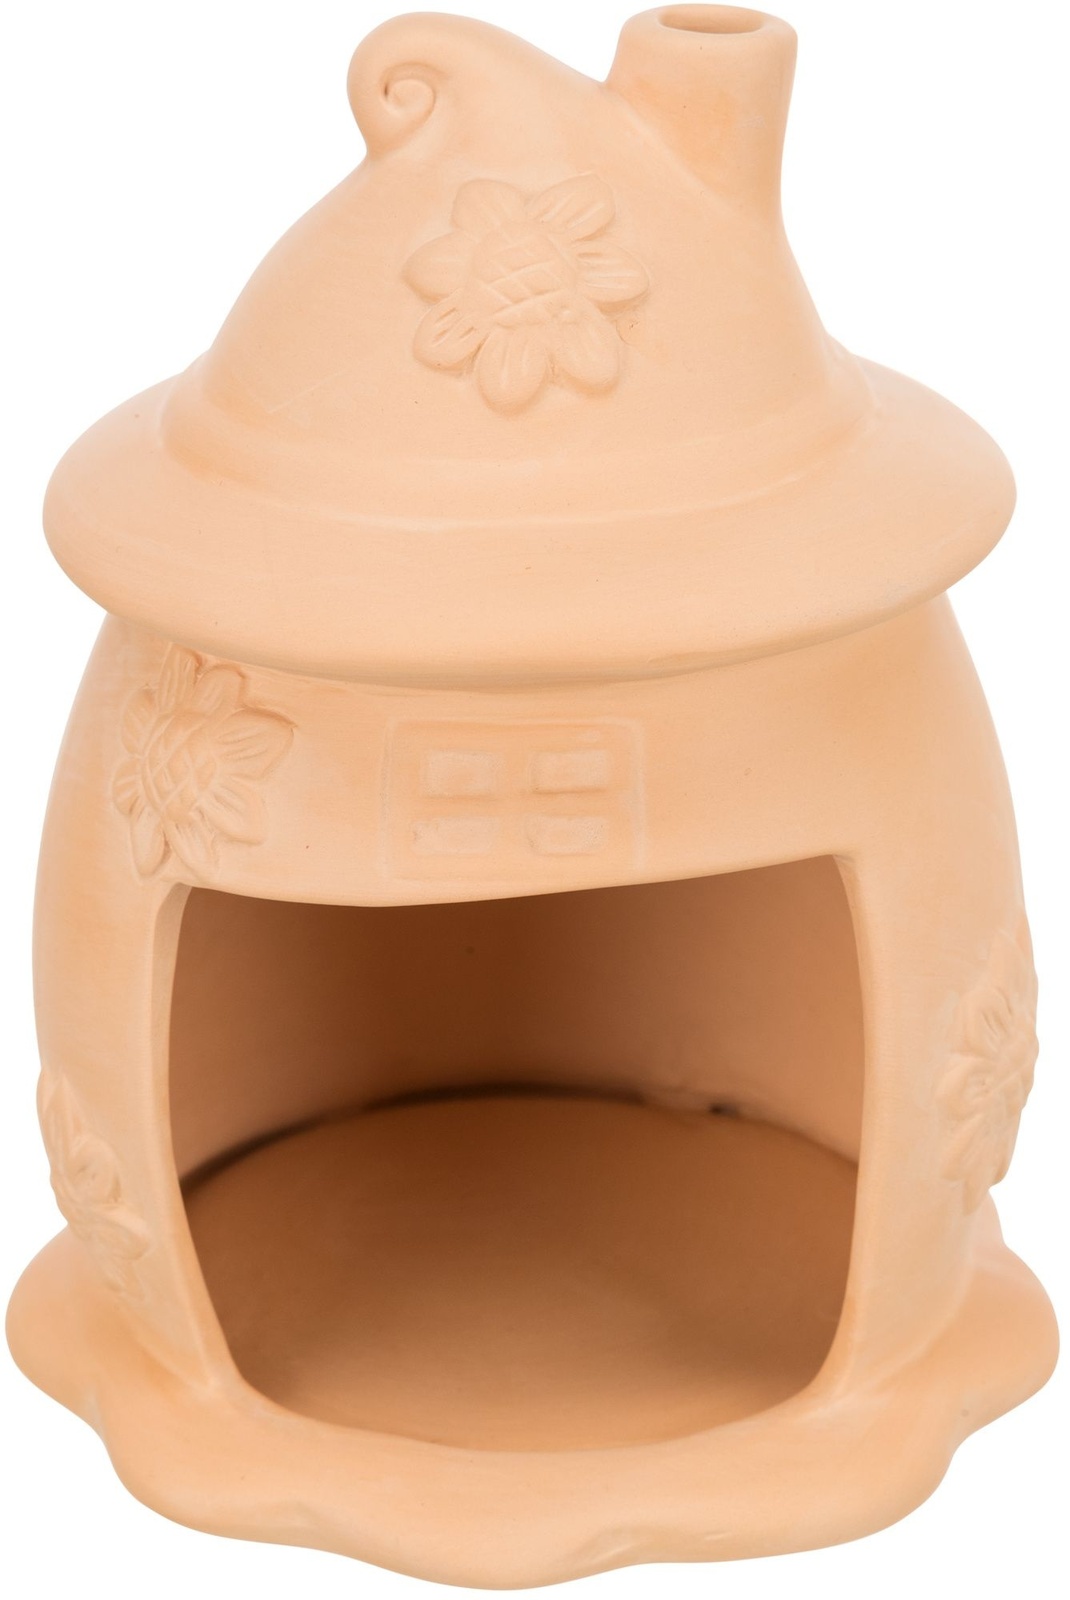 Trixie Trixie домик для мышей, керамика, терракотовый (330 г) trixie домик для мышей и хомяков керамика 11 x 6 x 10 см терракотовый 61374 0 275 кг 56341